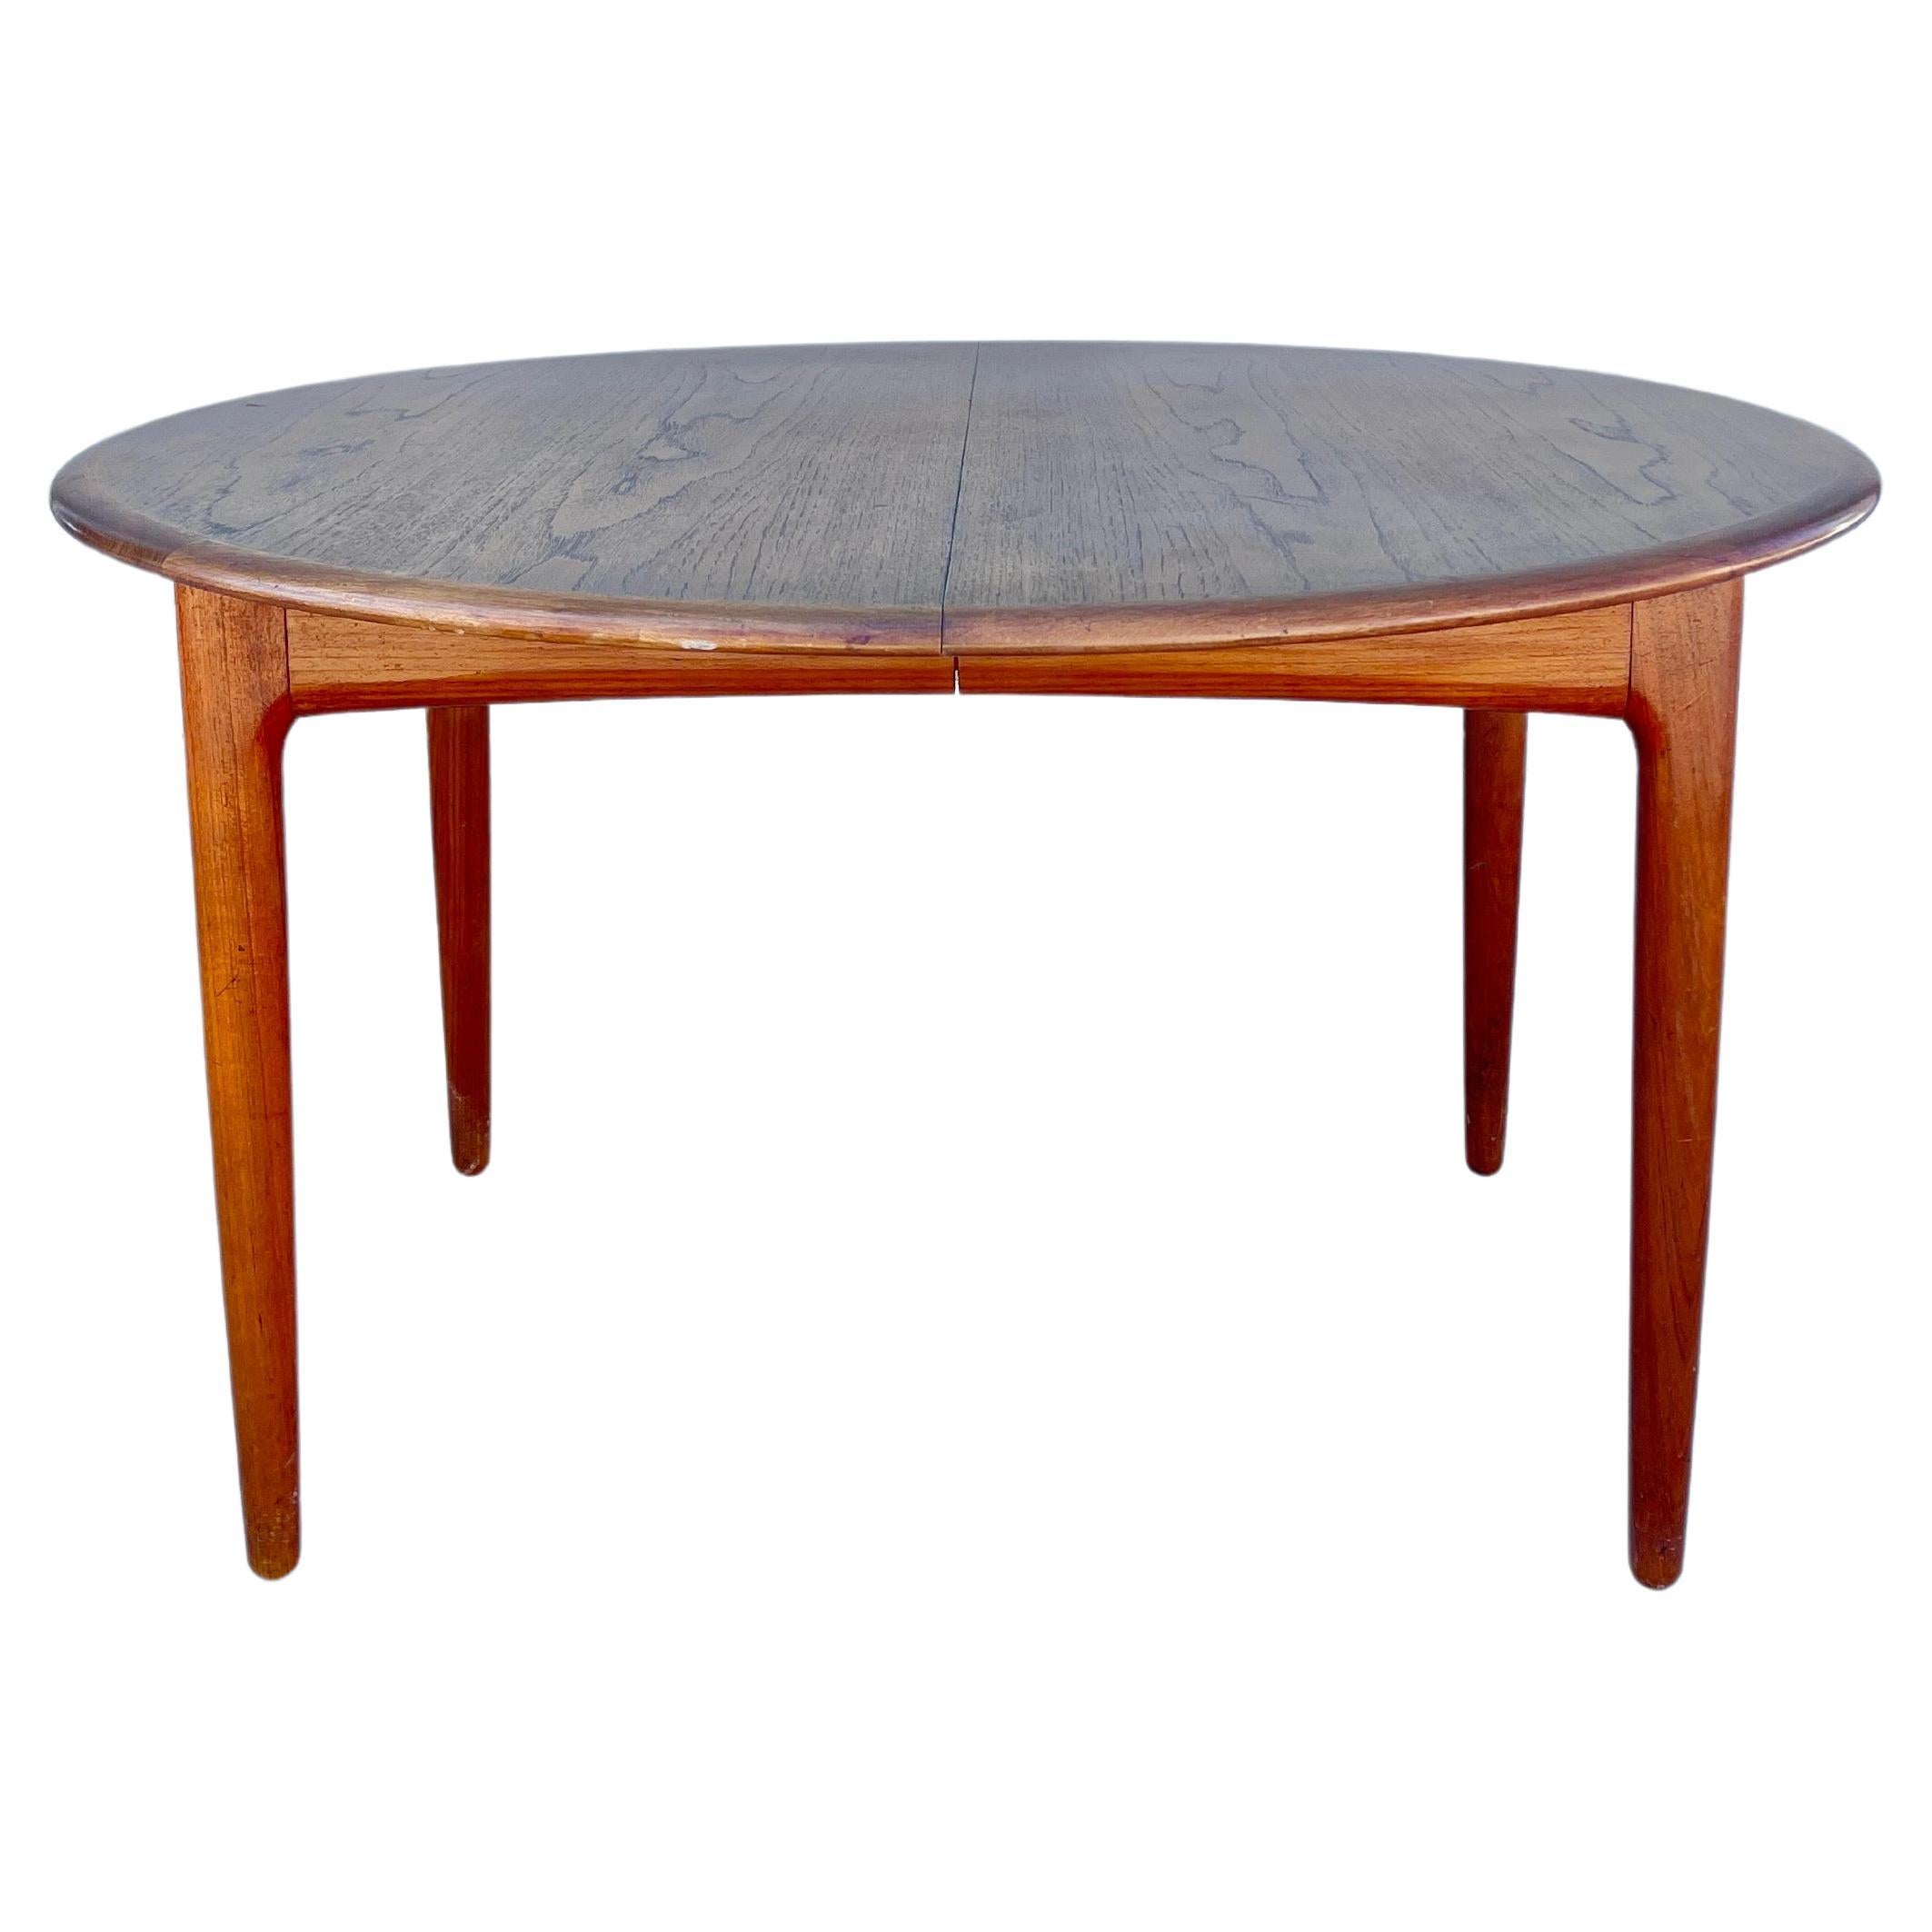 1960s Danish Modern Round Teak Dining Table For Sale